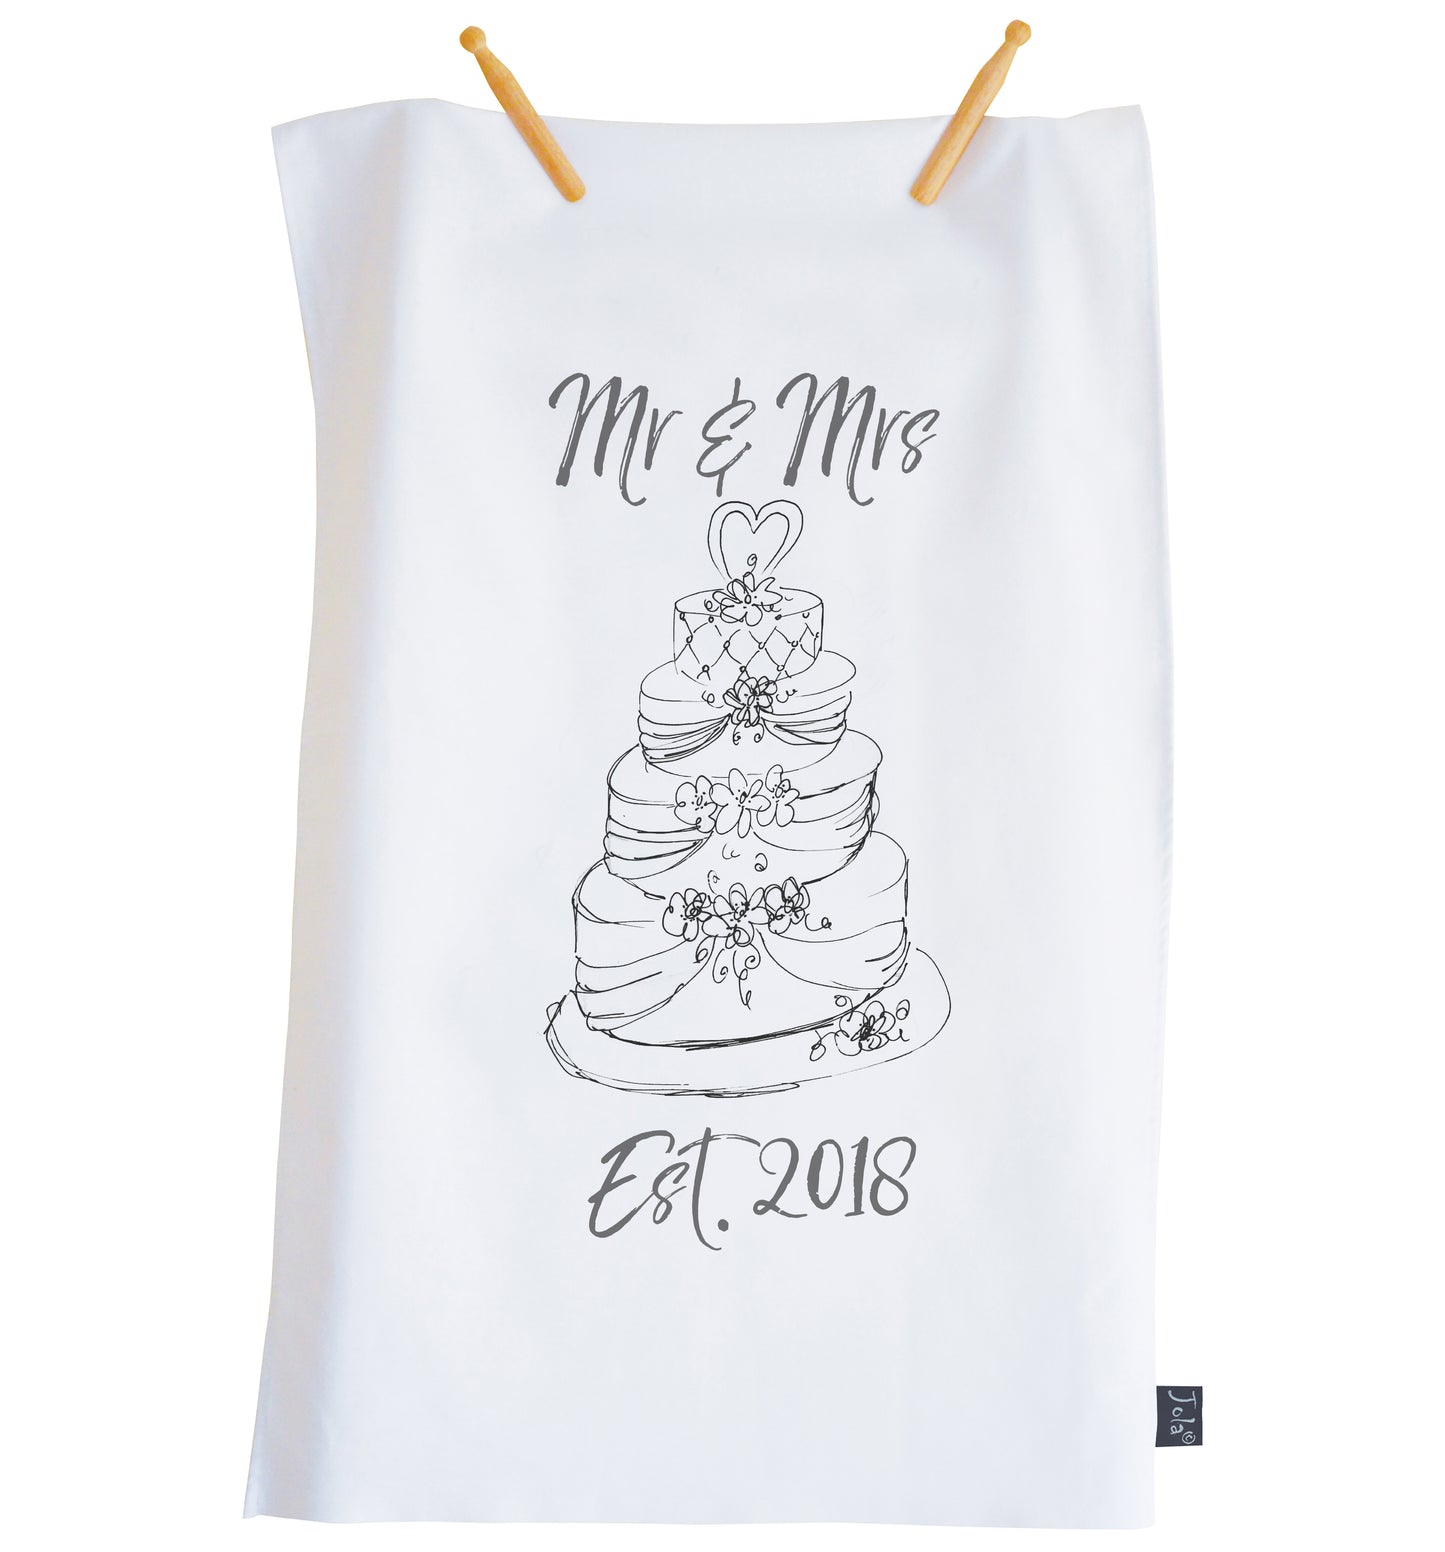 Mr & Mrs Est 2018Wedding cake tea towel